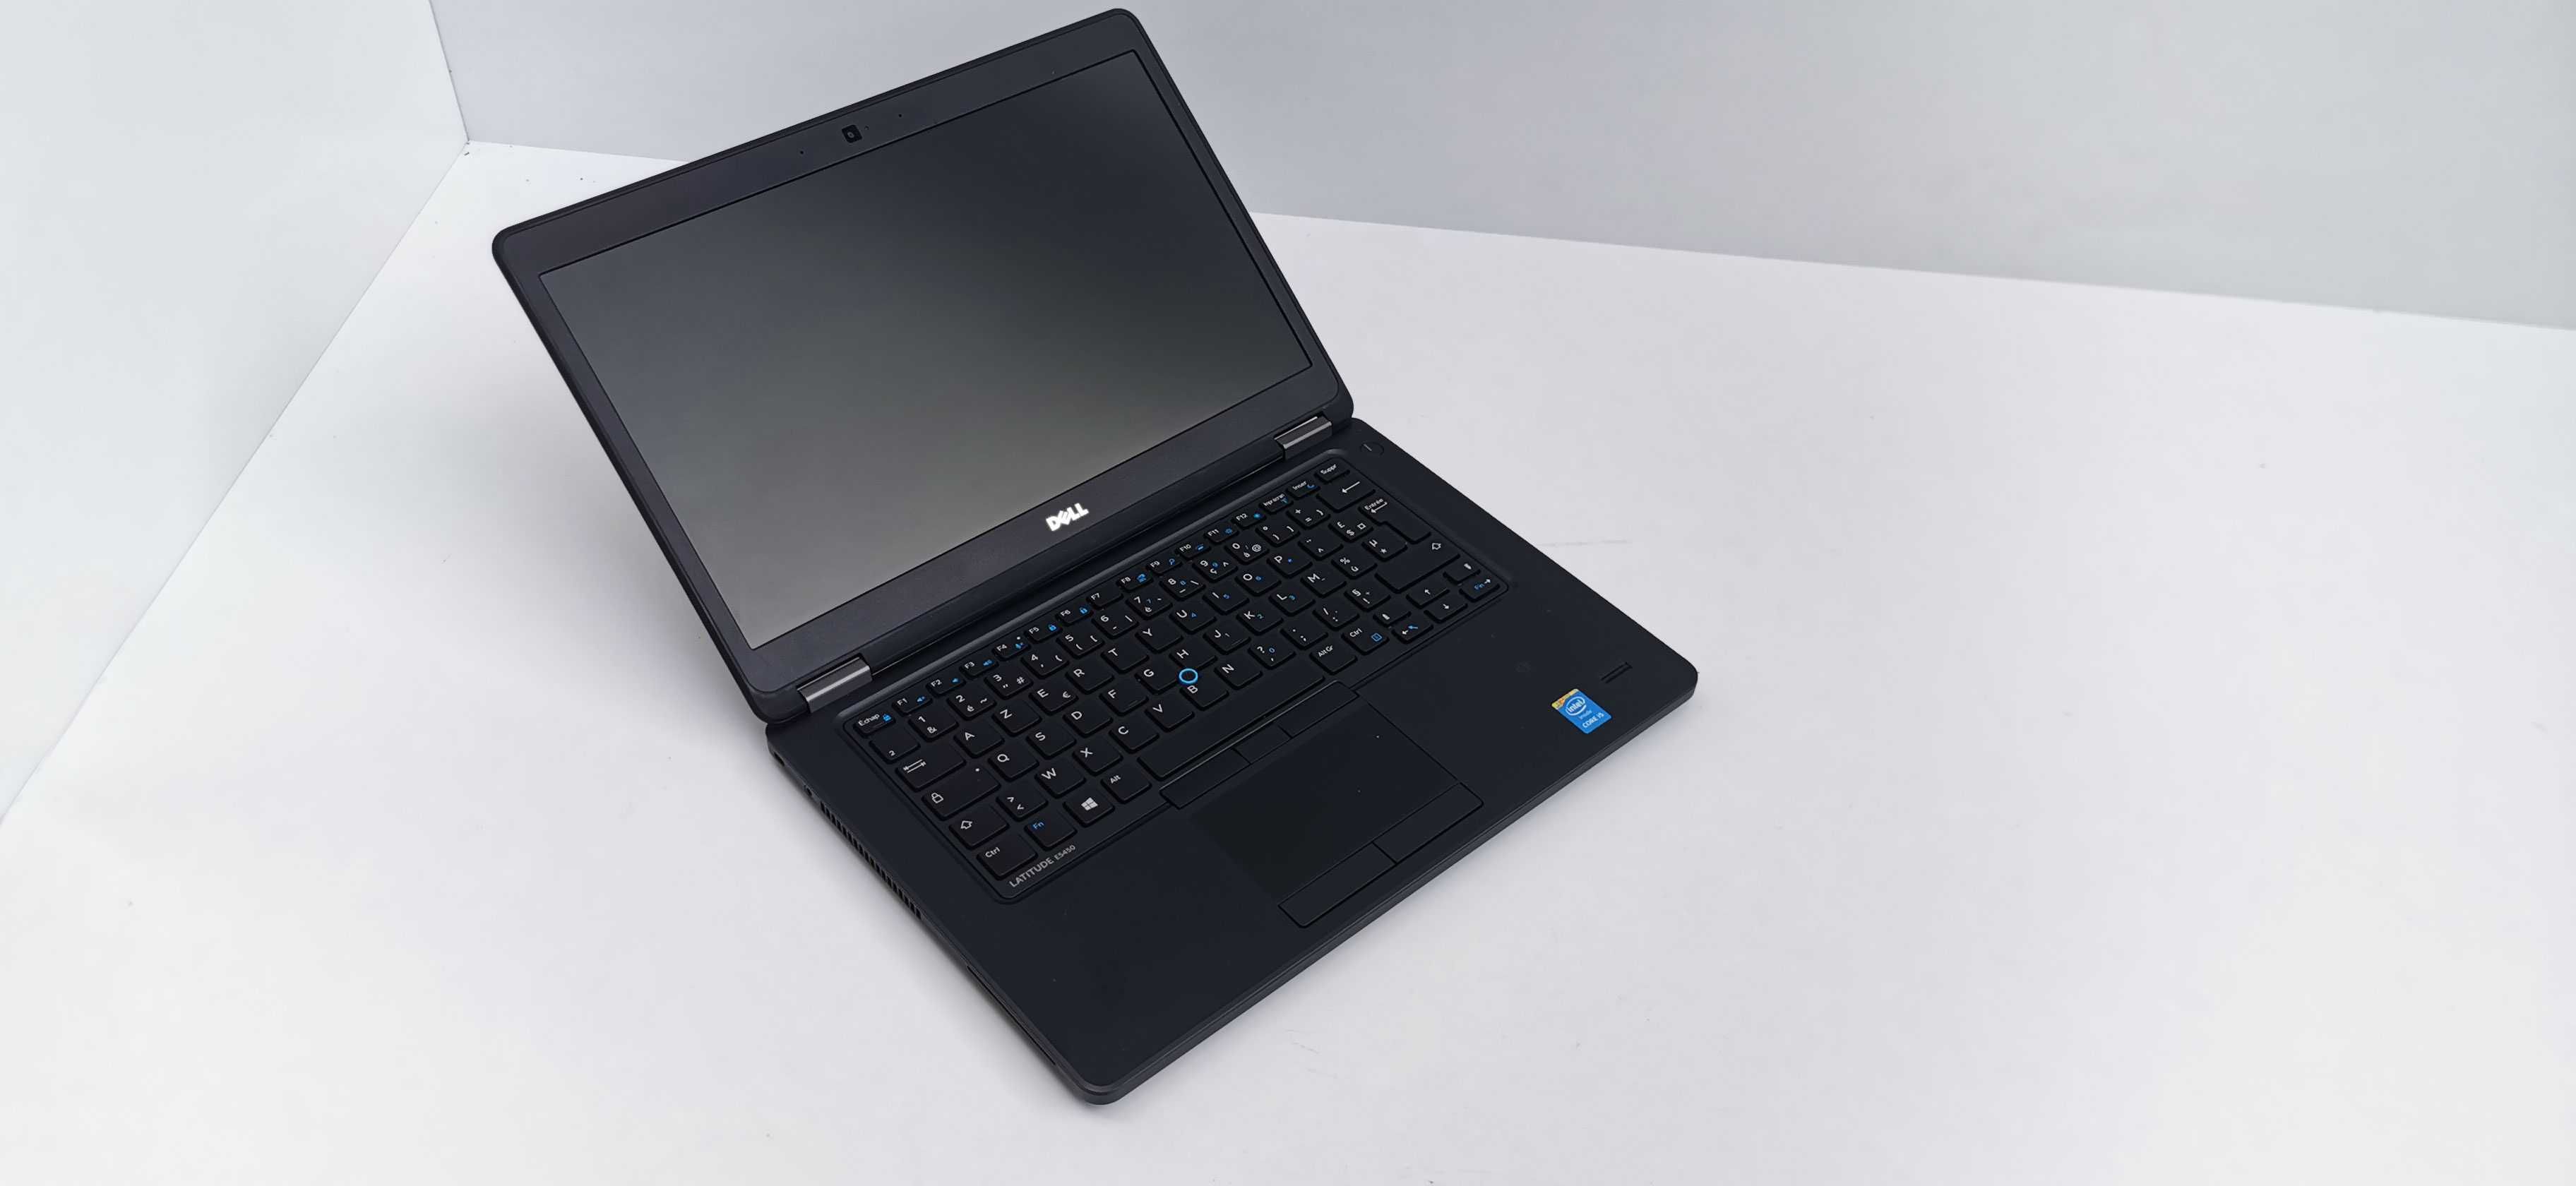 OFERTA Laptopuri Dell Latitude E5450 Inceput de An Scolar